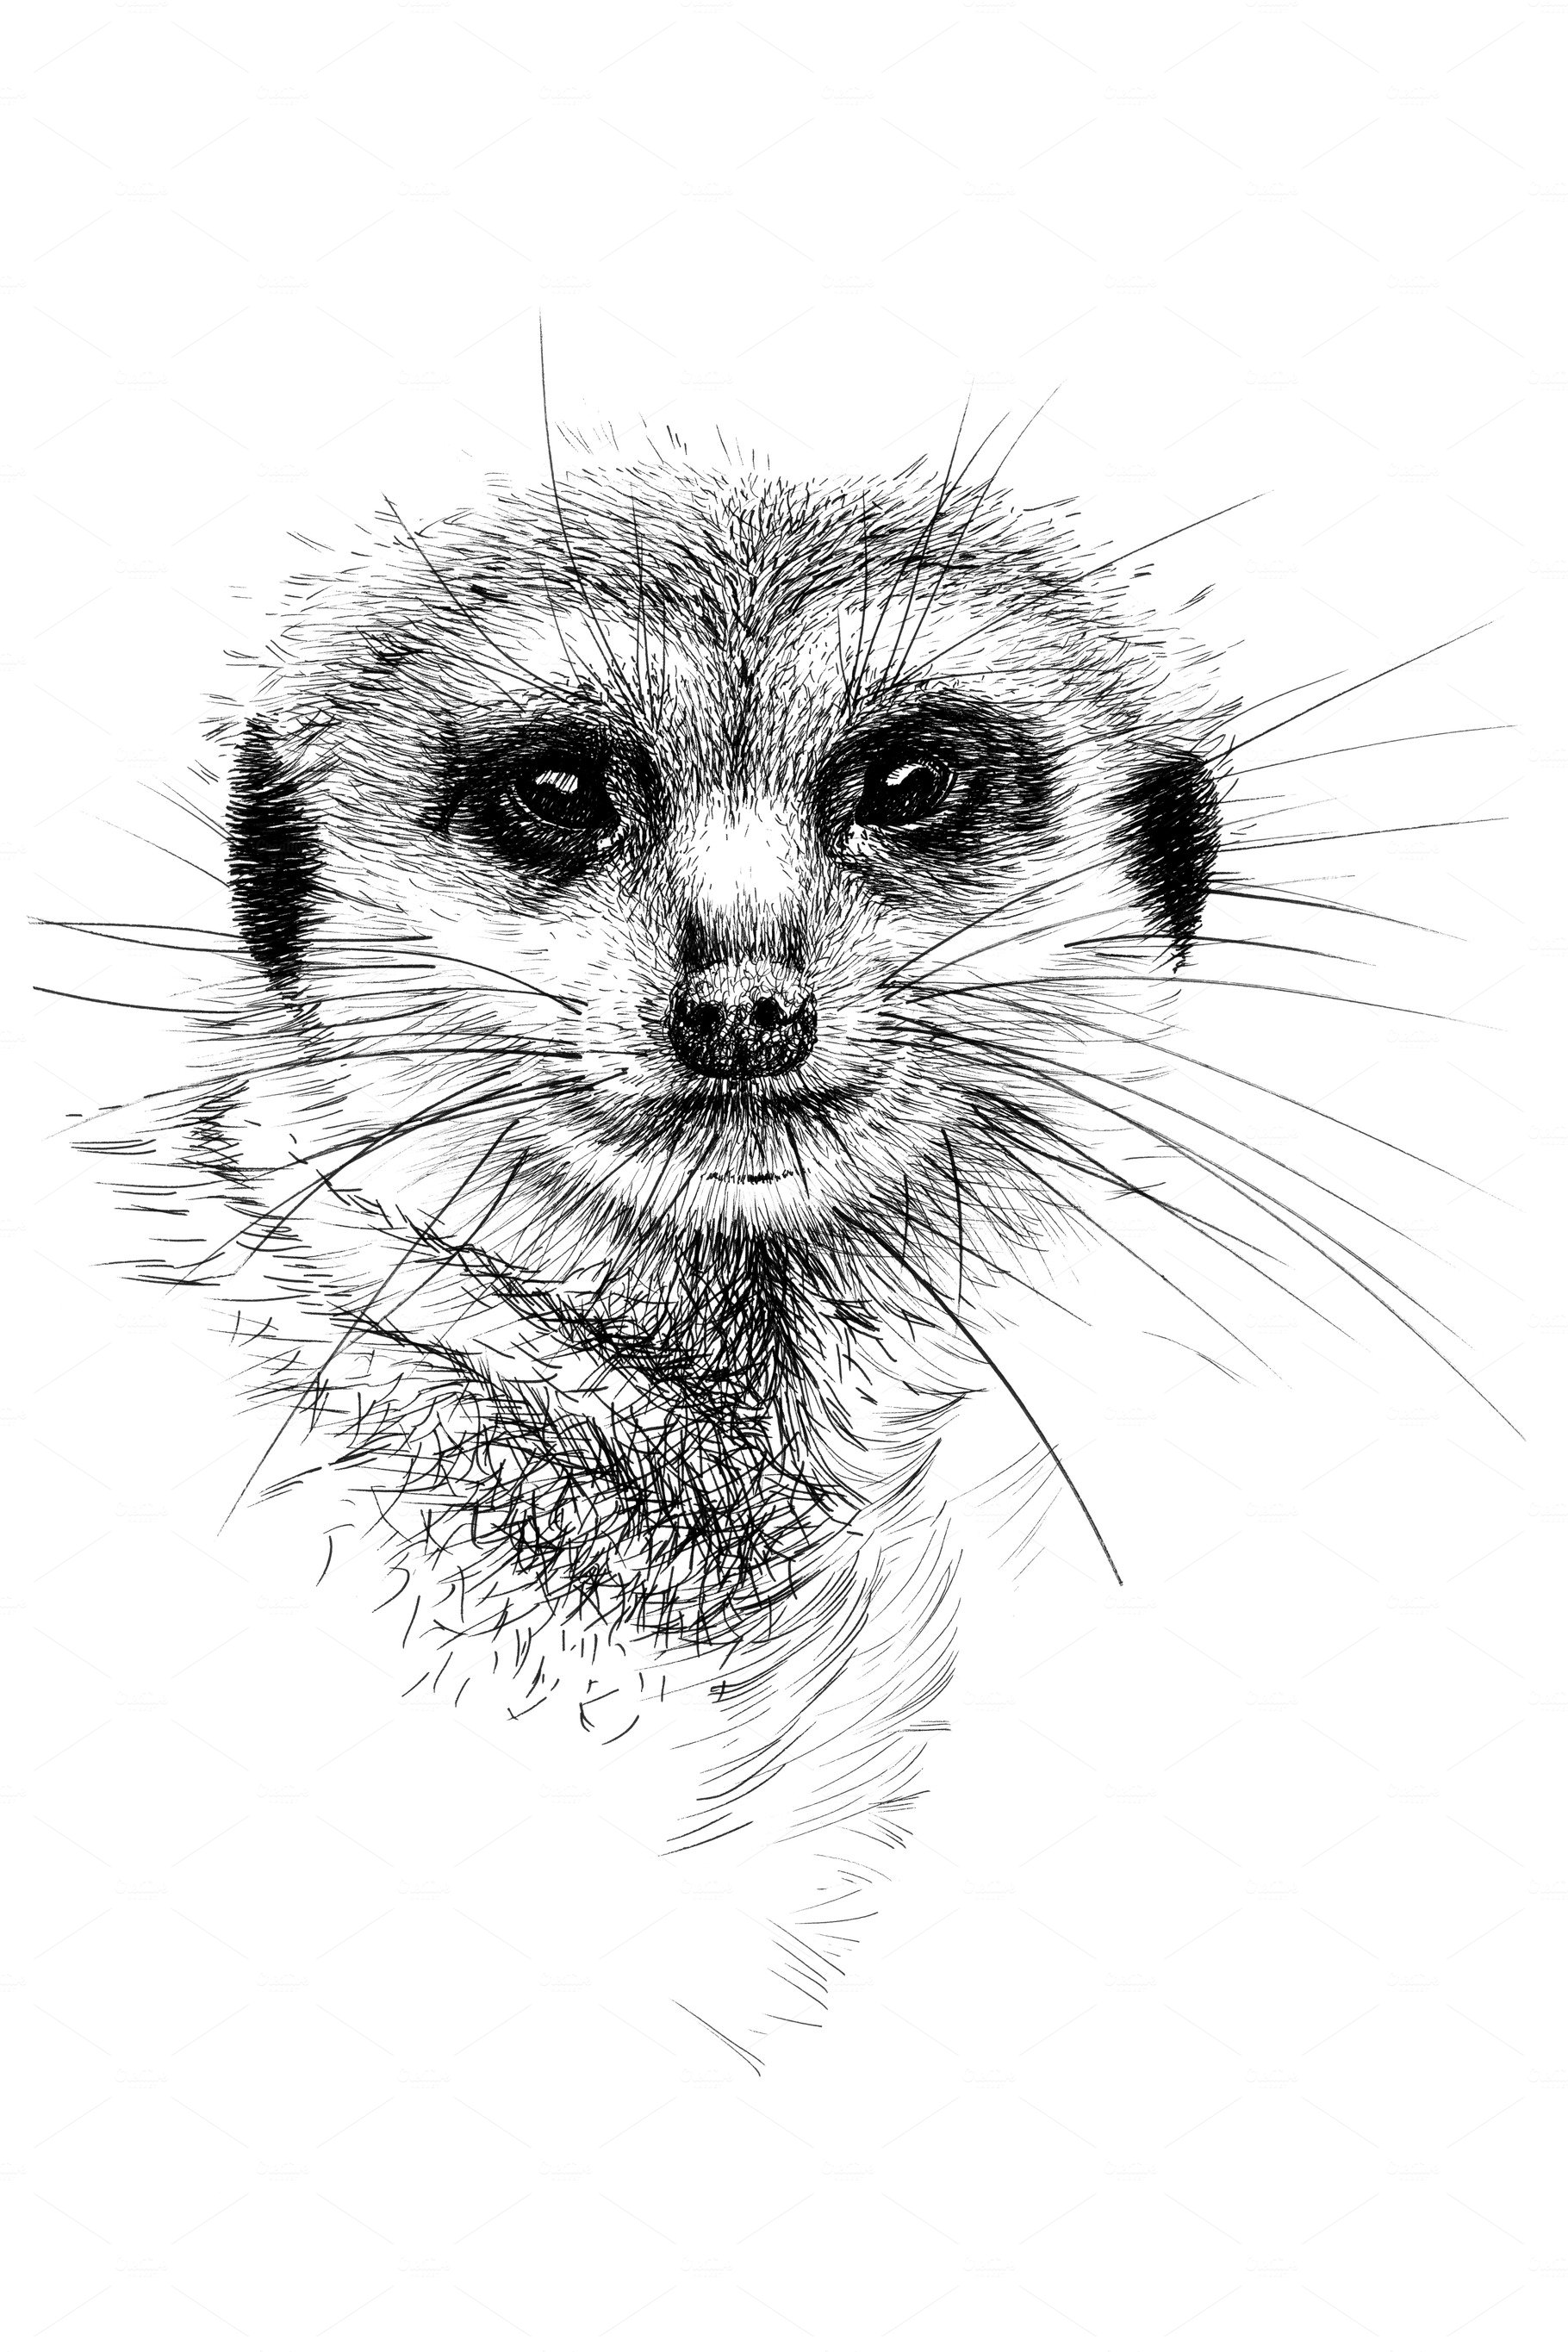 Hand drawn meerkat portrait, sketch cover image.